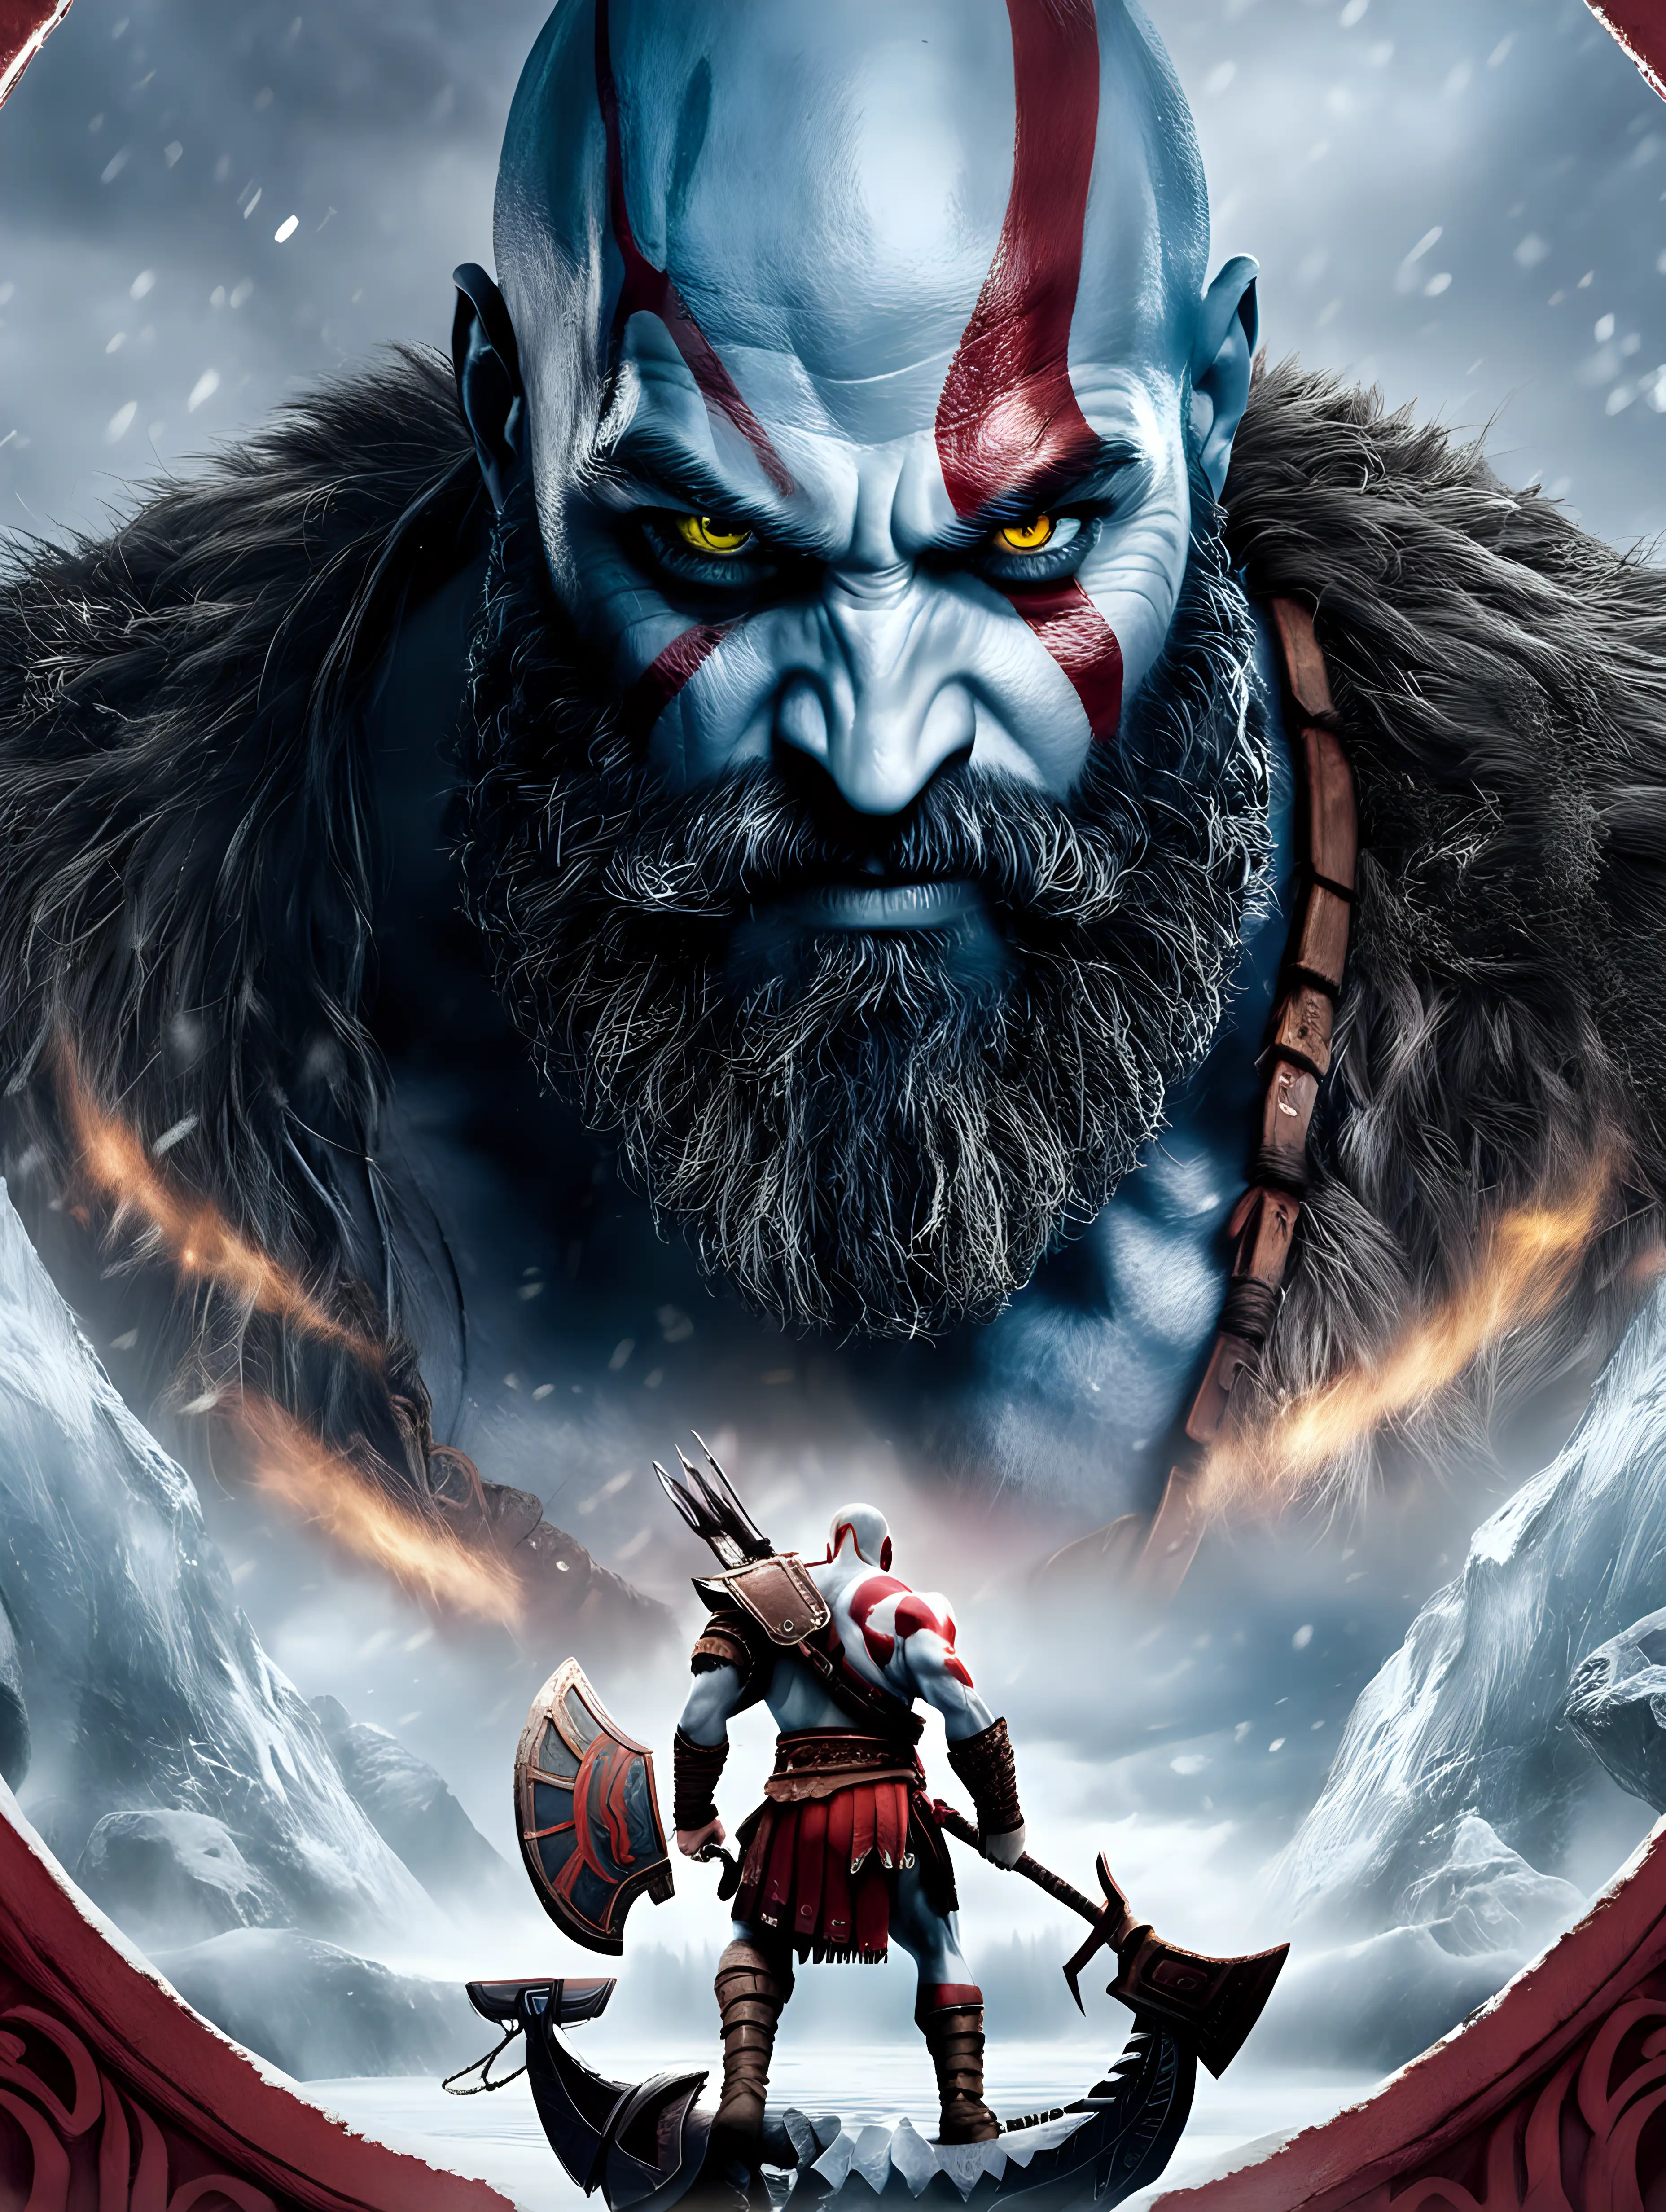 Epic God of War Ragnarok Movie Poster Featuring Mythical Warriors Battling Amidst Nordic Landscapes